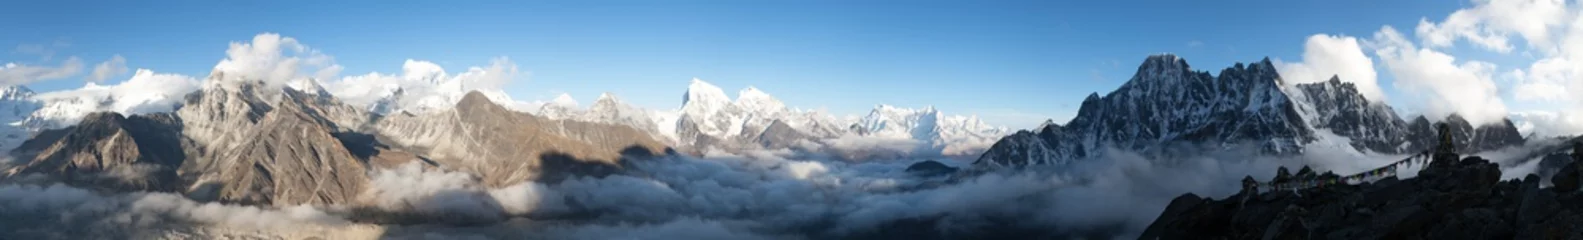 Fototapete Panoramafotos Panorama des Mount Everest, Lhotse, Makalu und Cho Oyu